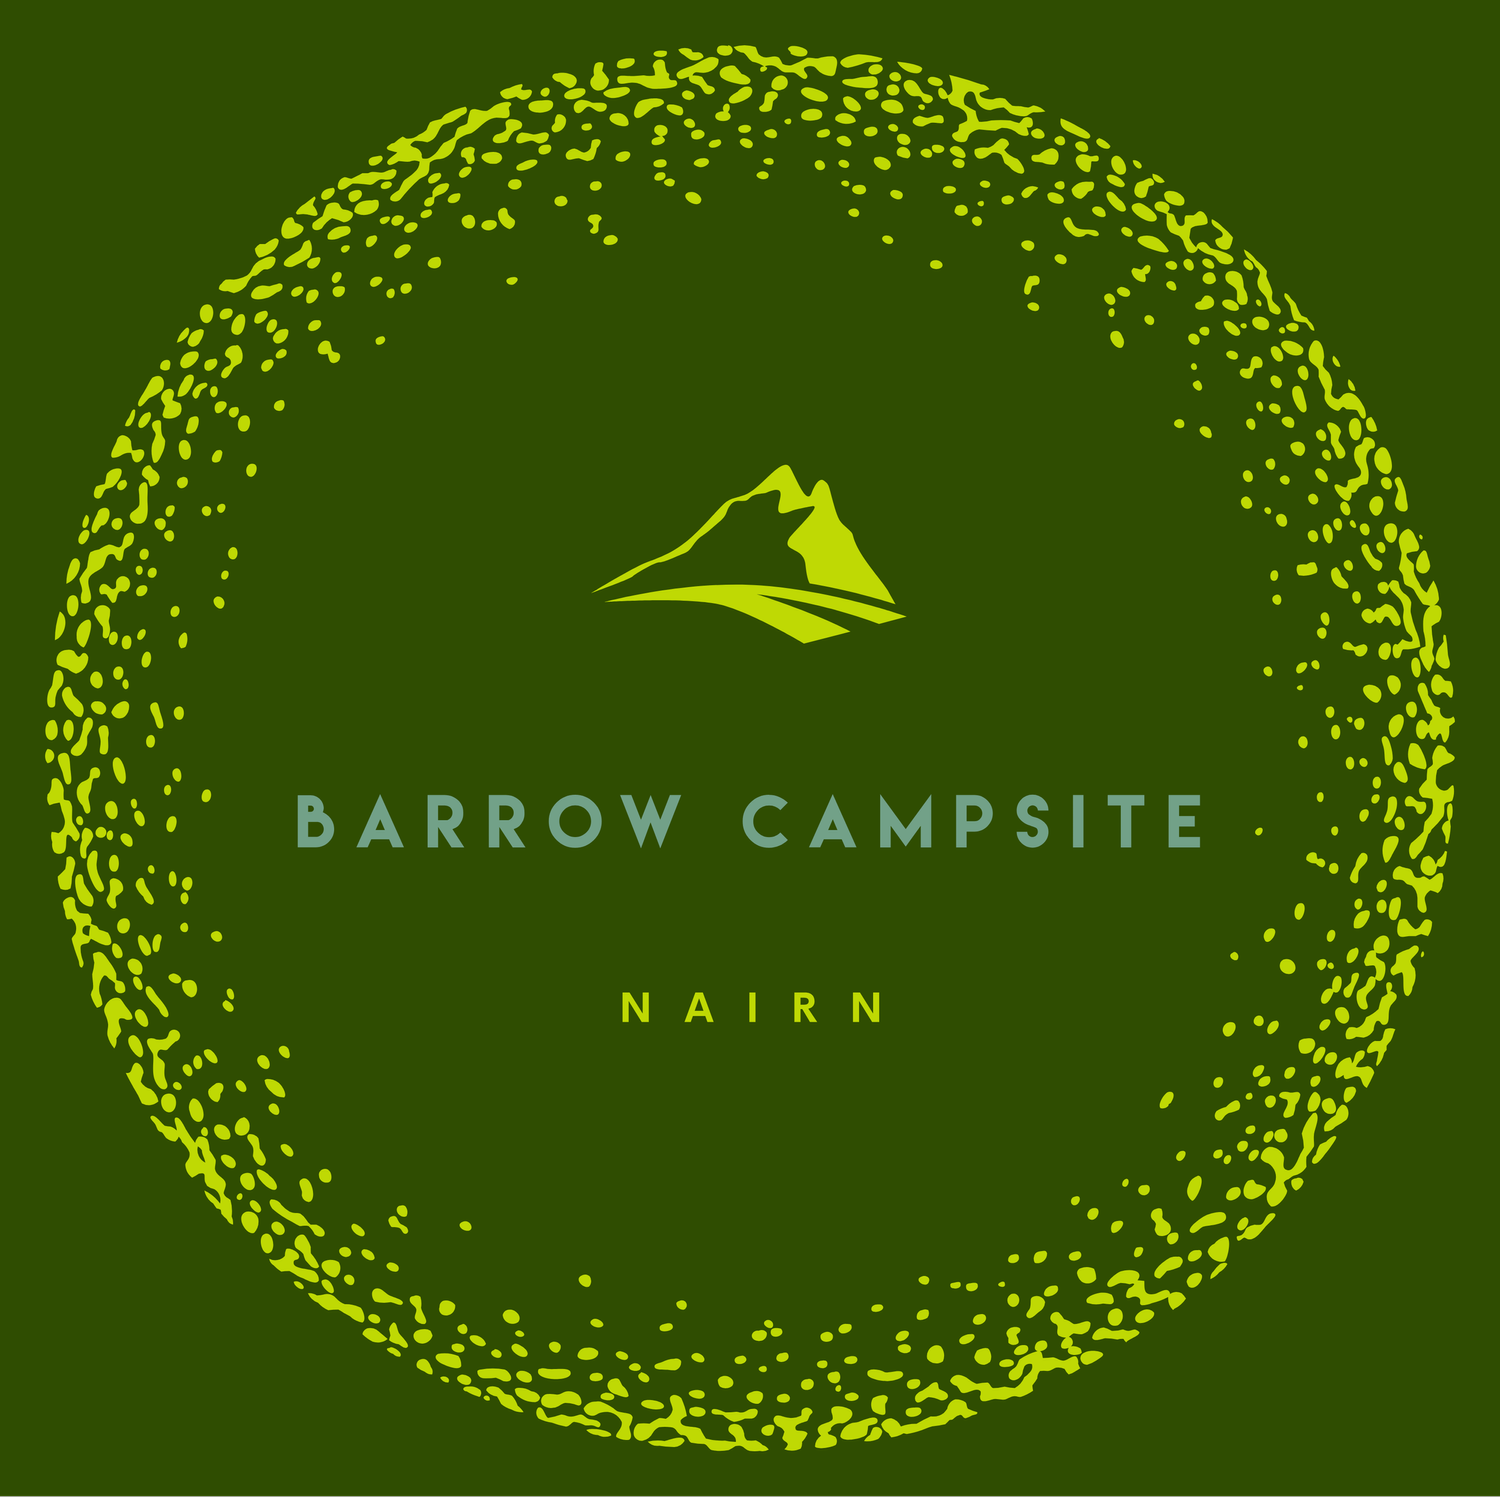 Barrow Camping & Caravan site in Nairn, Scotland